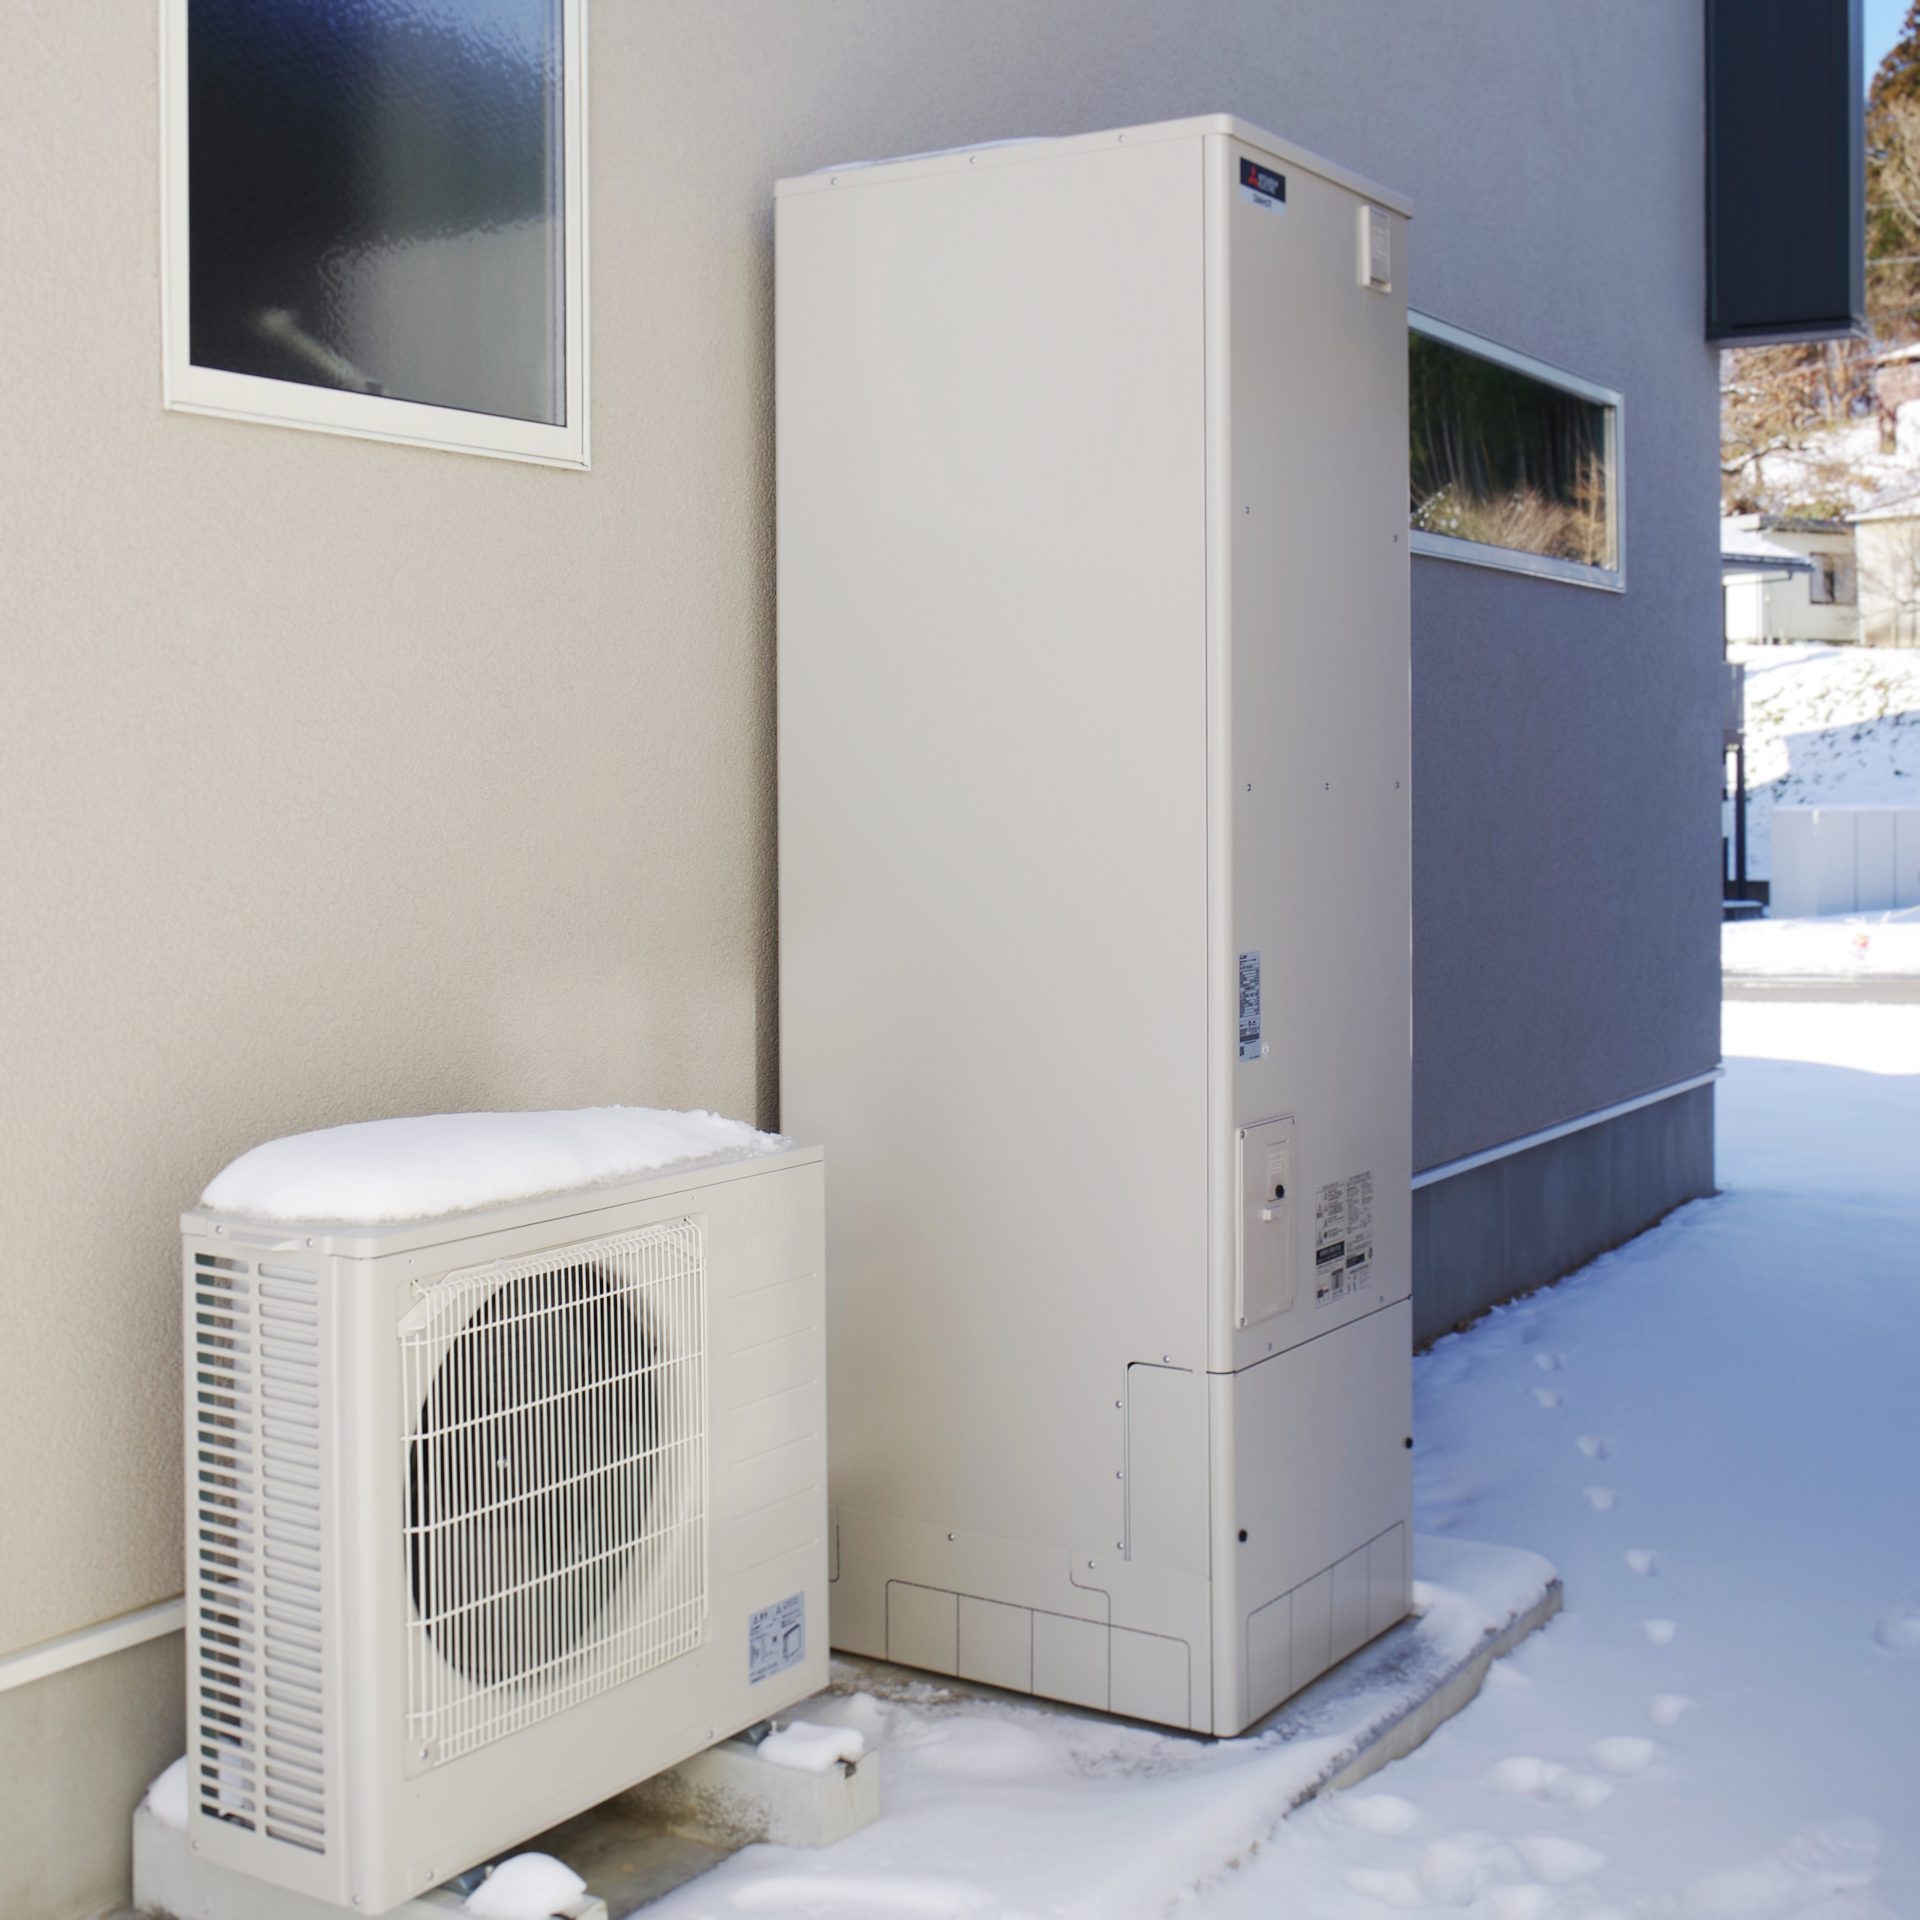 冬場の給湯器凍結防止対策